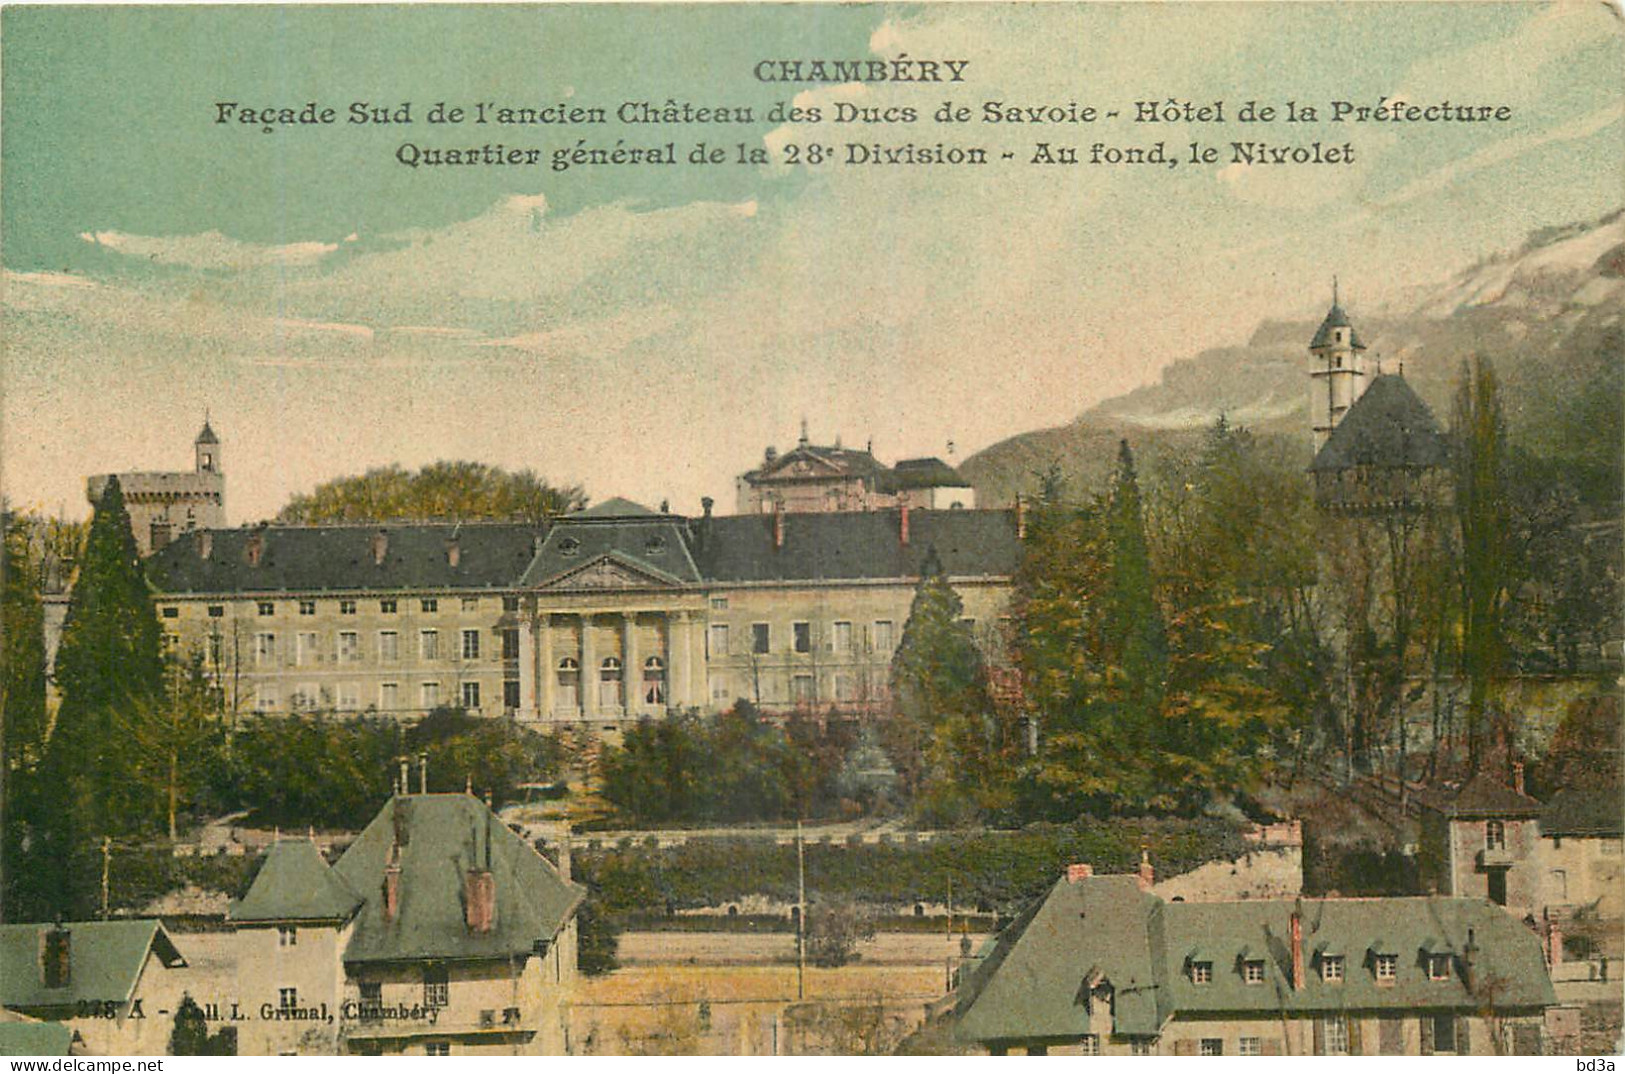 73 - CHAMBERY - FACADE SUD DE L'ANCIEN CHATEAU DES DUCS - 278 - COL L GRIMAL - Chambery